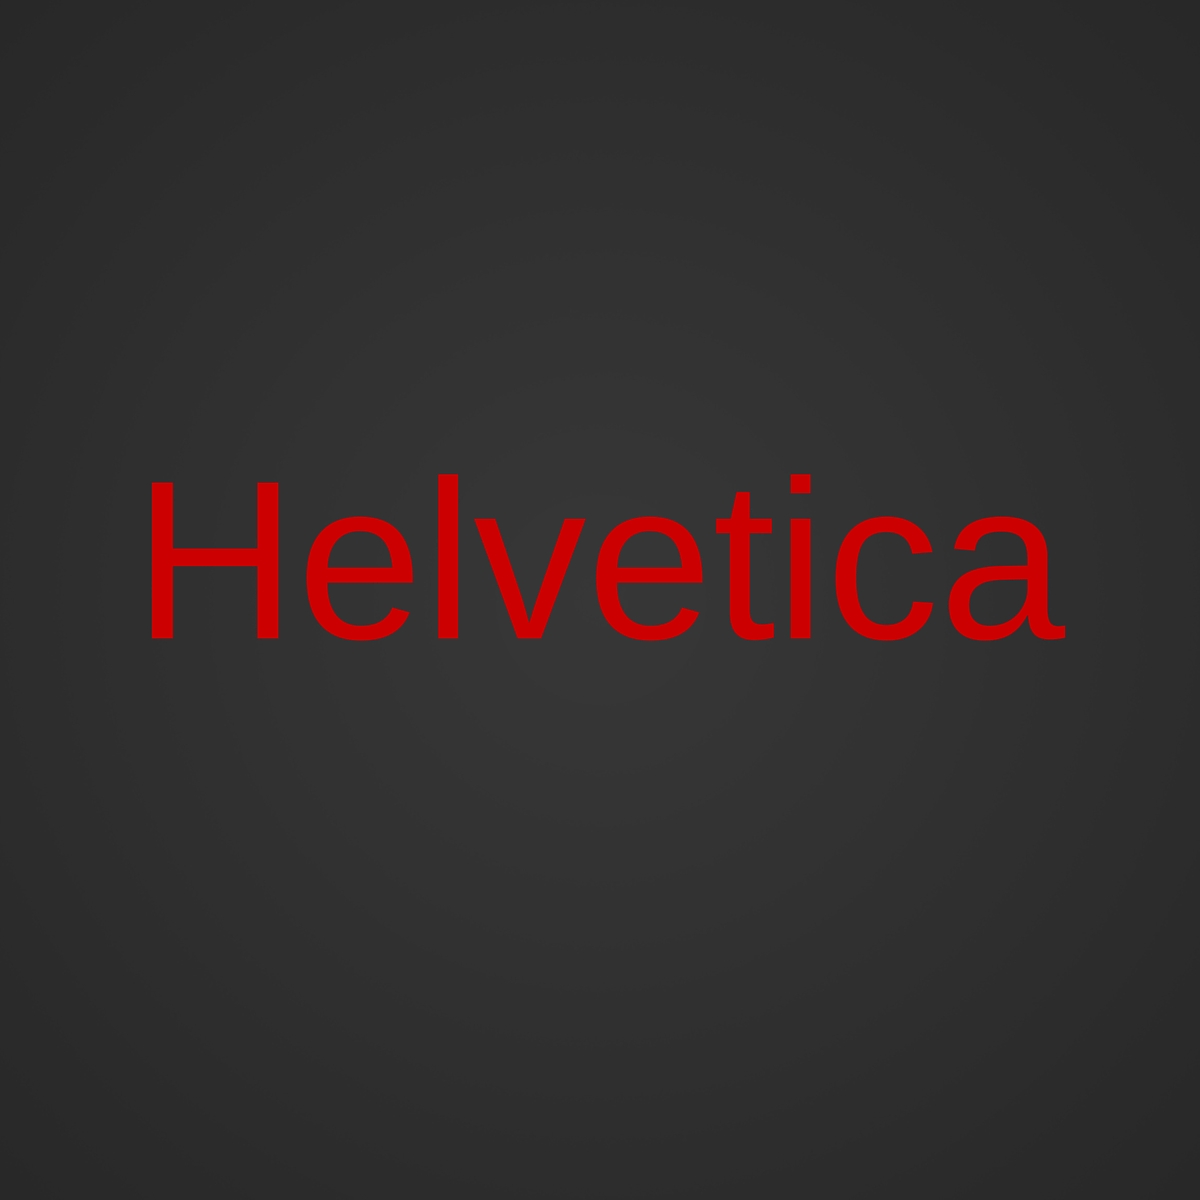 Helvetica Documentary